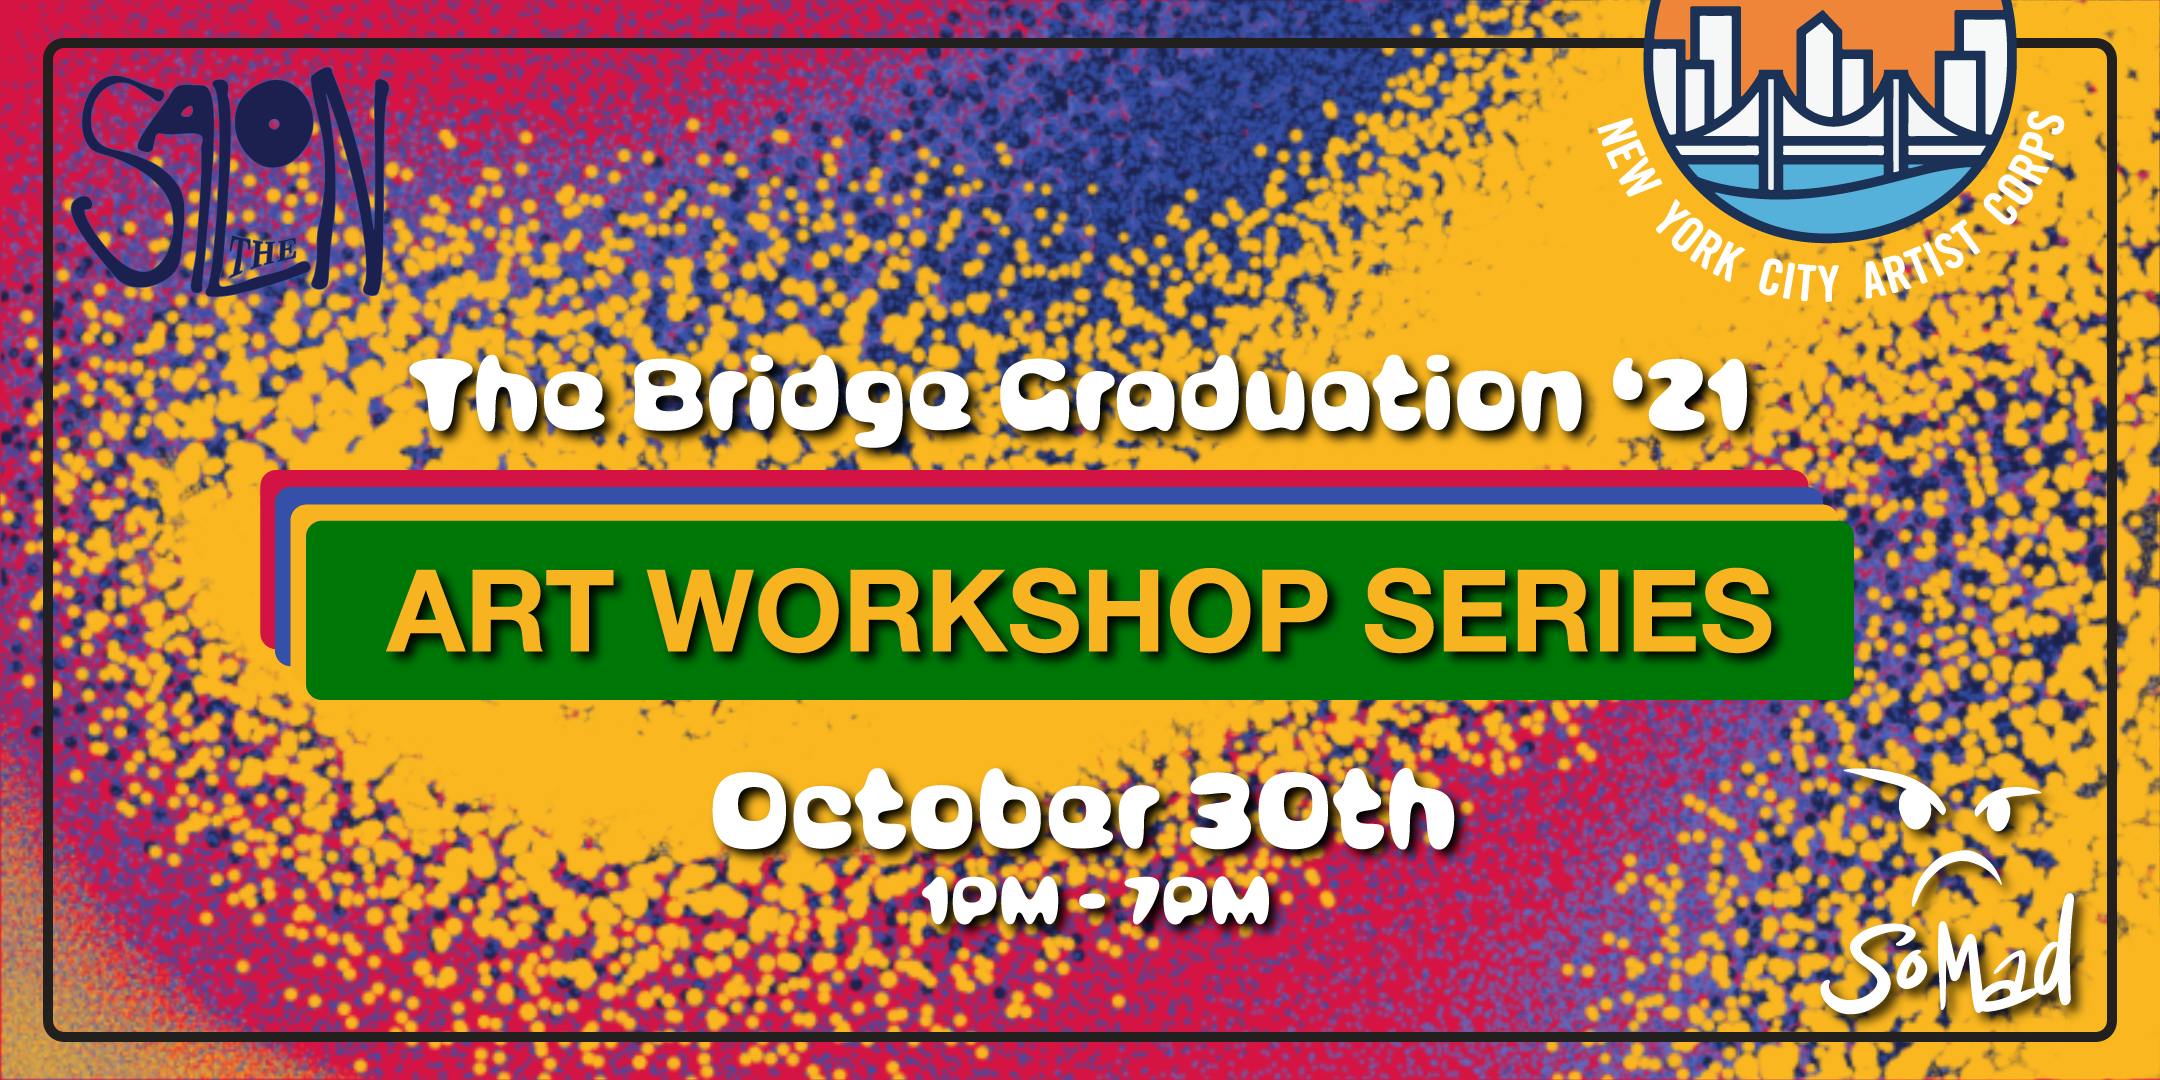 The Bridge Program "Graduation"